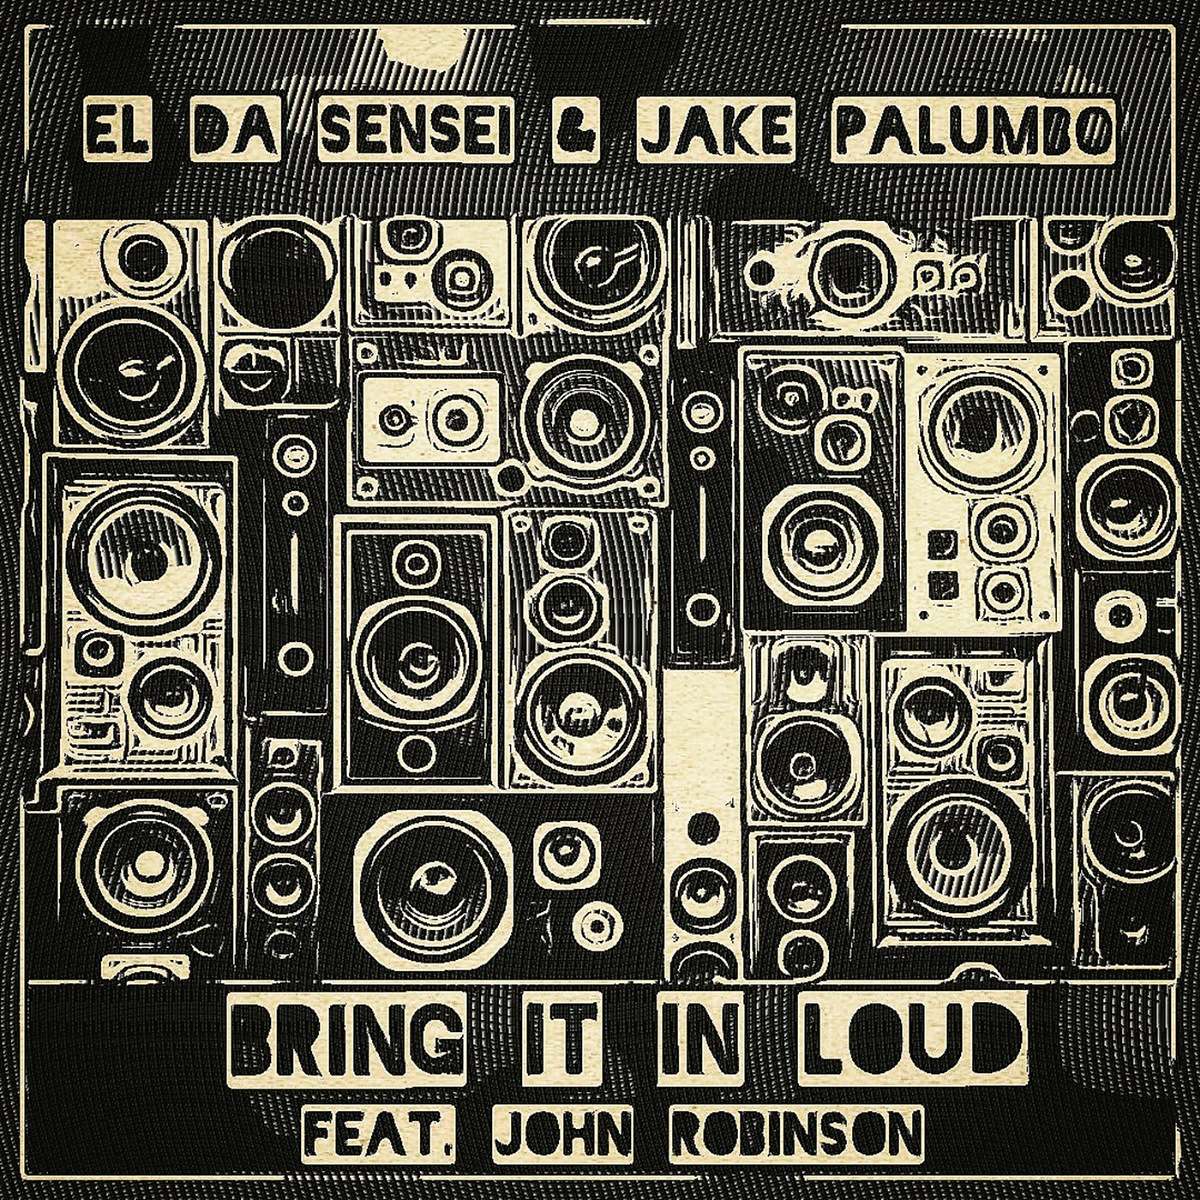 Video: El Da Sensei & Jake Palumbo feat. John Robinson - Bring It In Loud